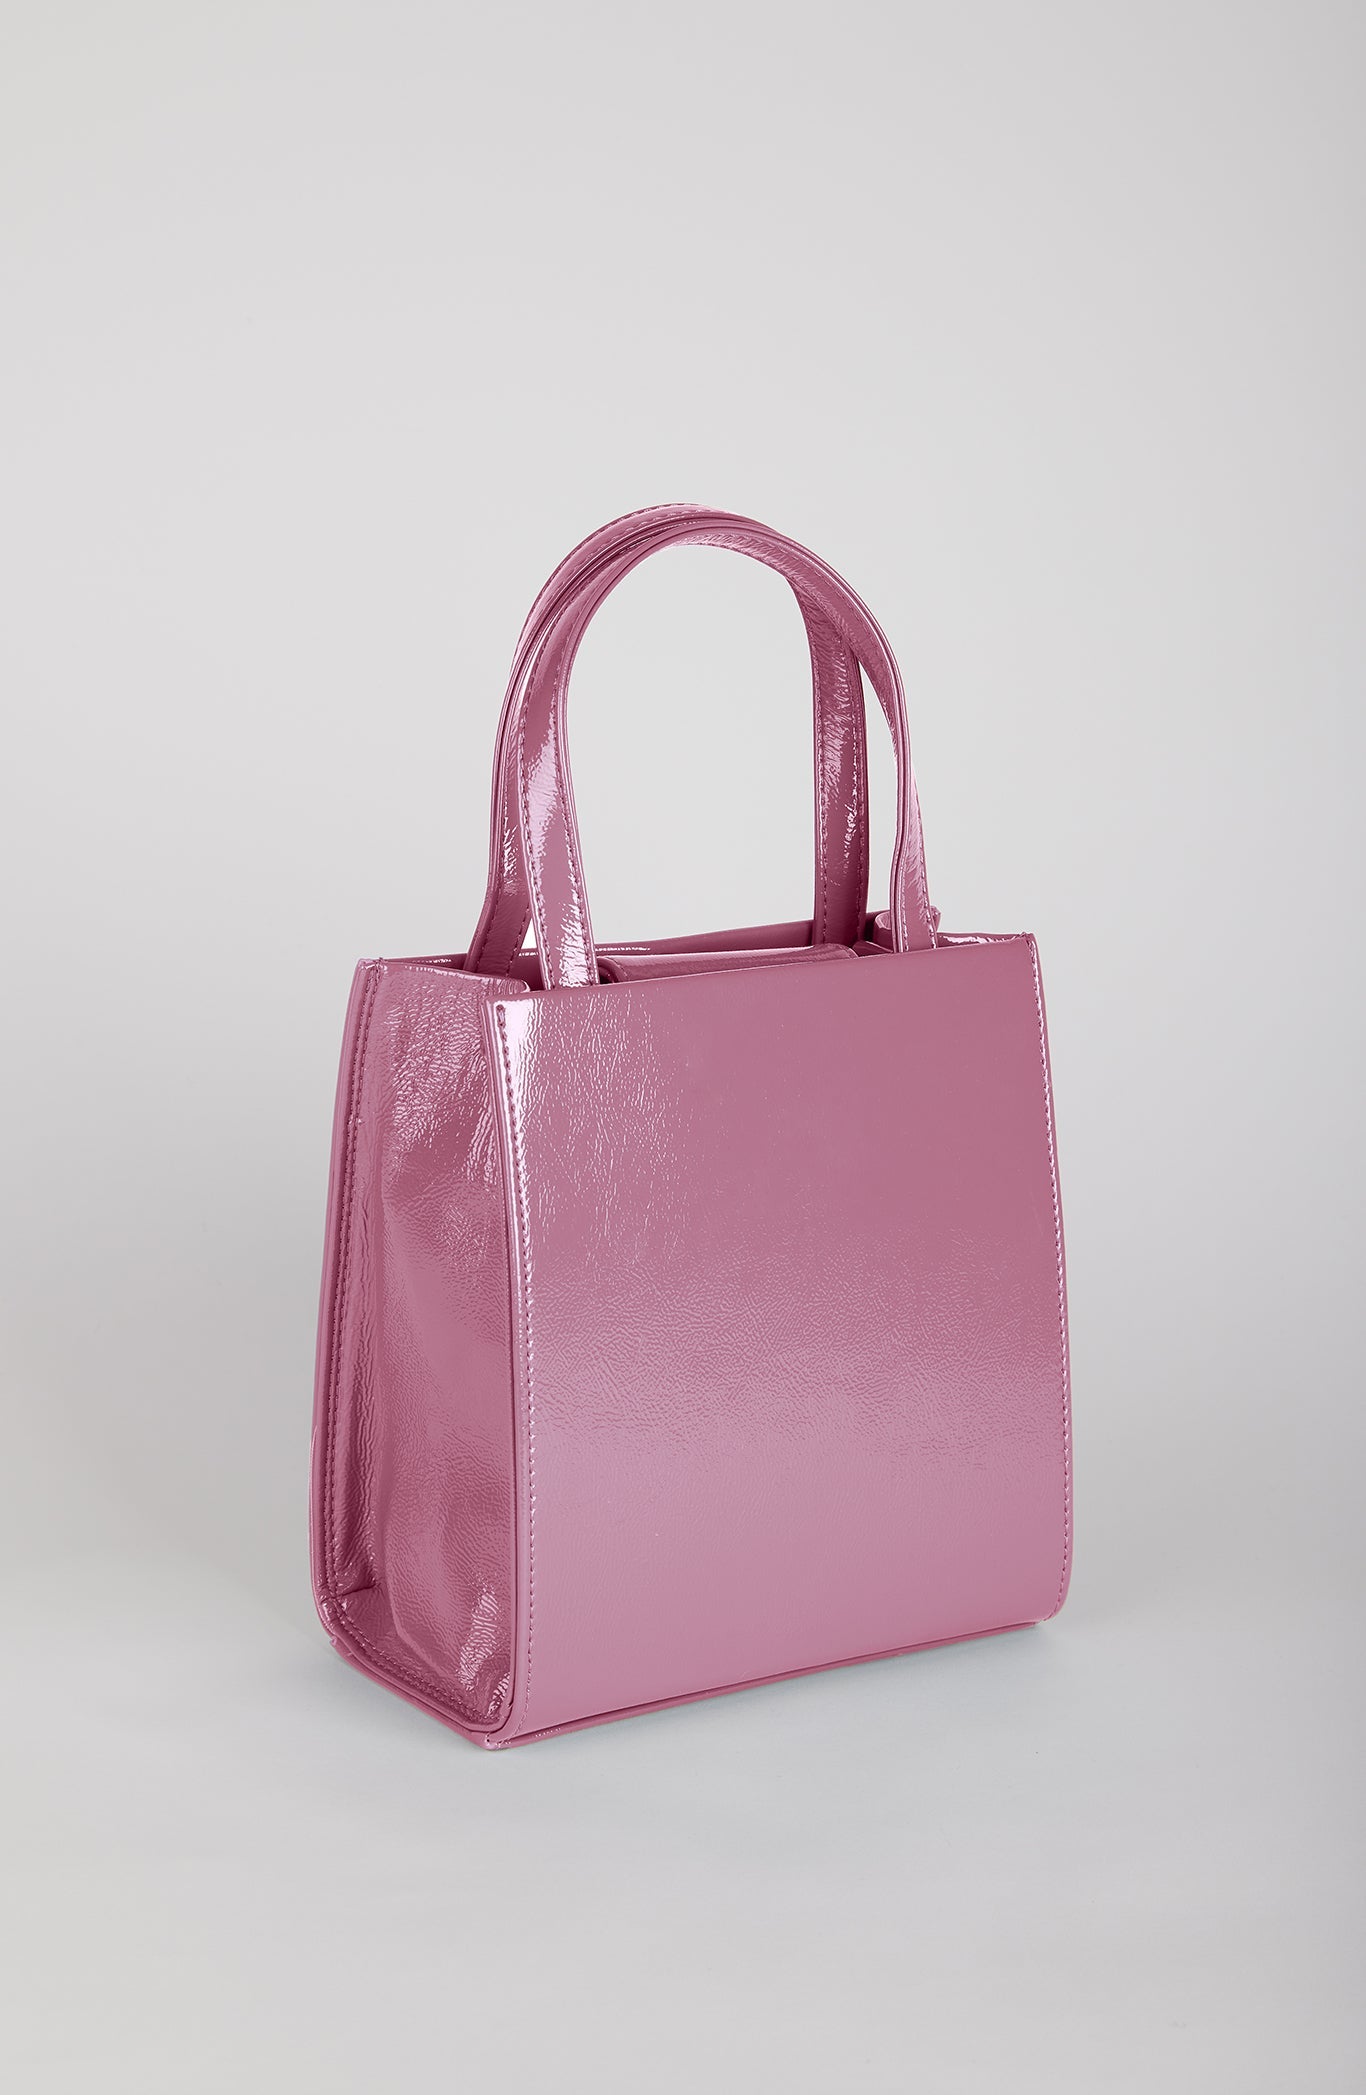 Pink PVC mini tote cross body bag